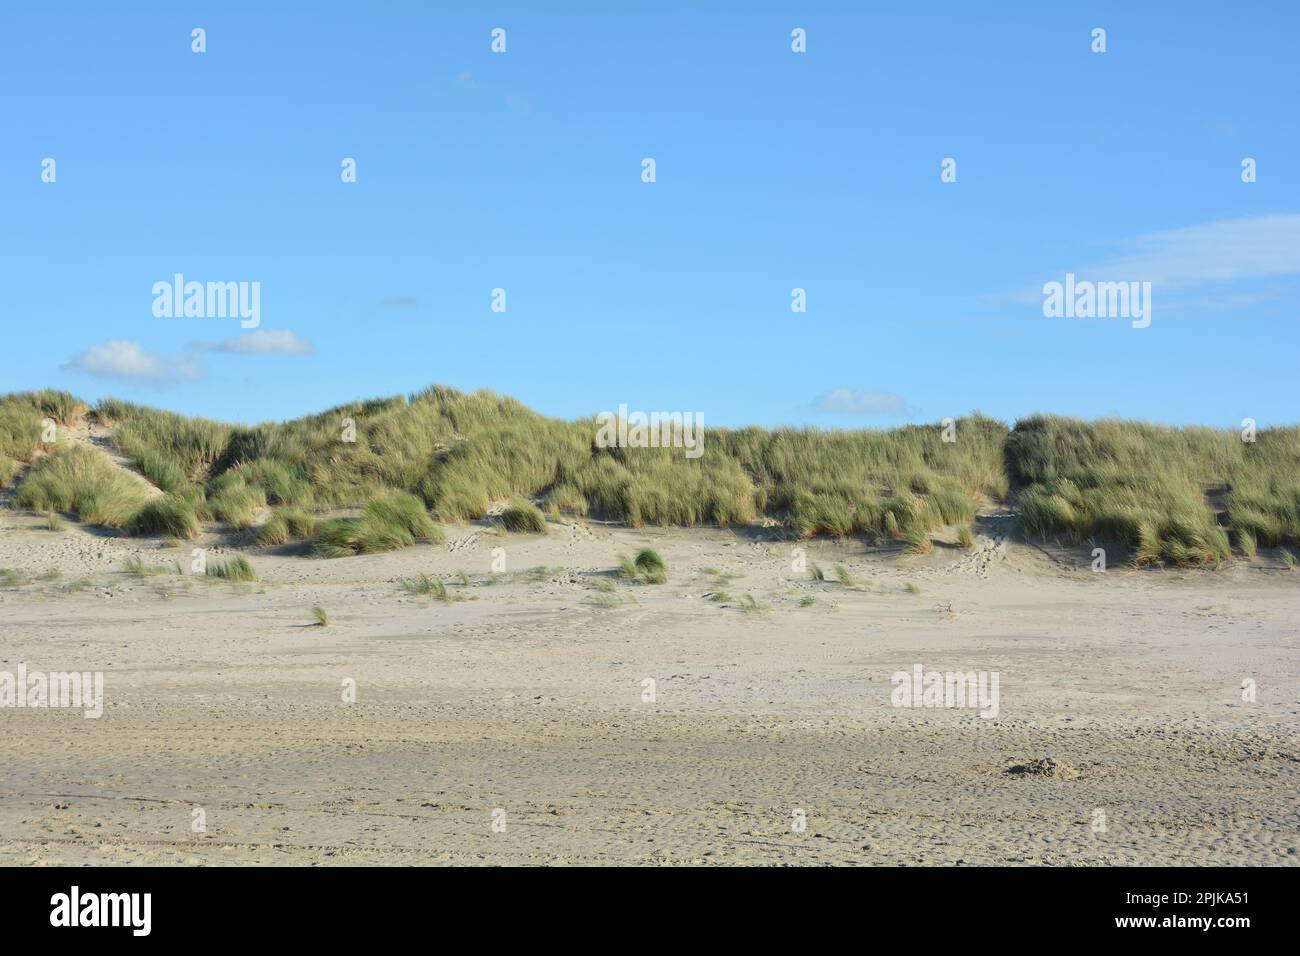 Sand dunes on a beach with marram grass Stock Photo